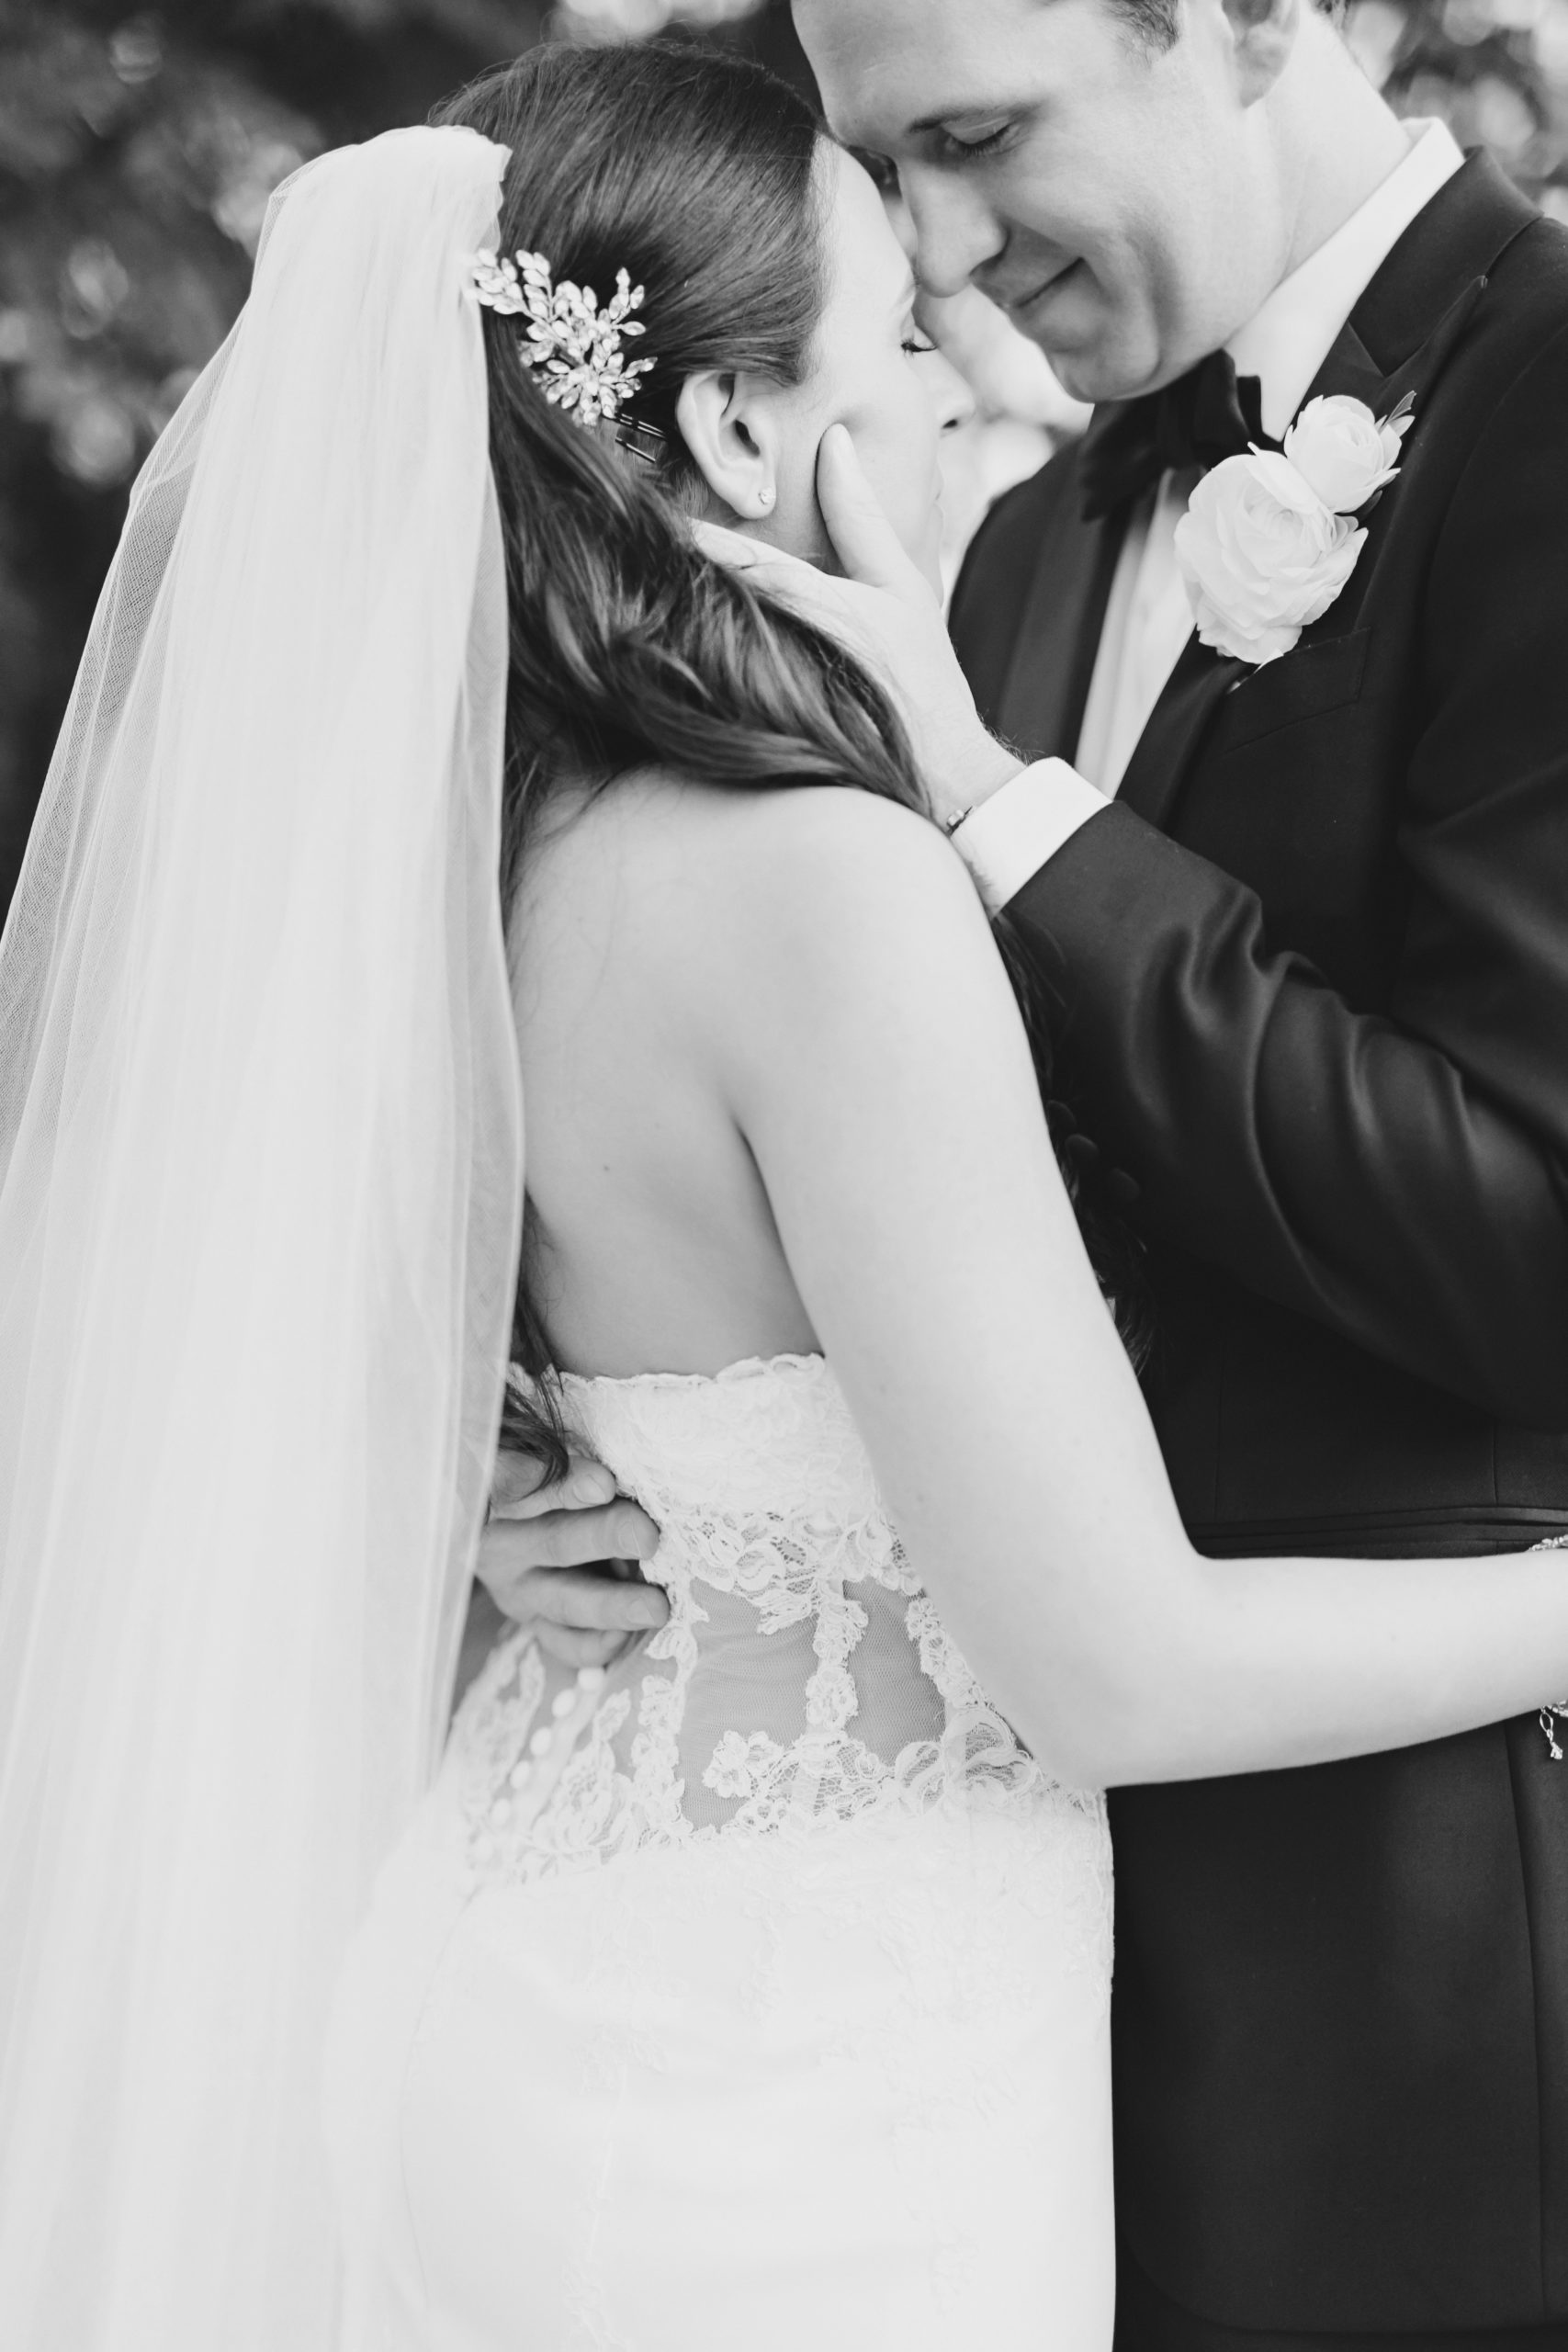 Jennifer & Michael's Wedding | Julie Wilhite Photography | Austin Wedding Photographer | via juliewilhite.com